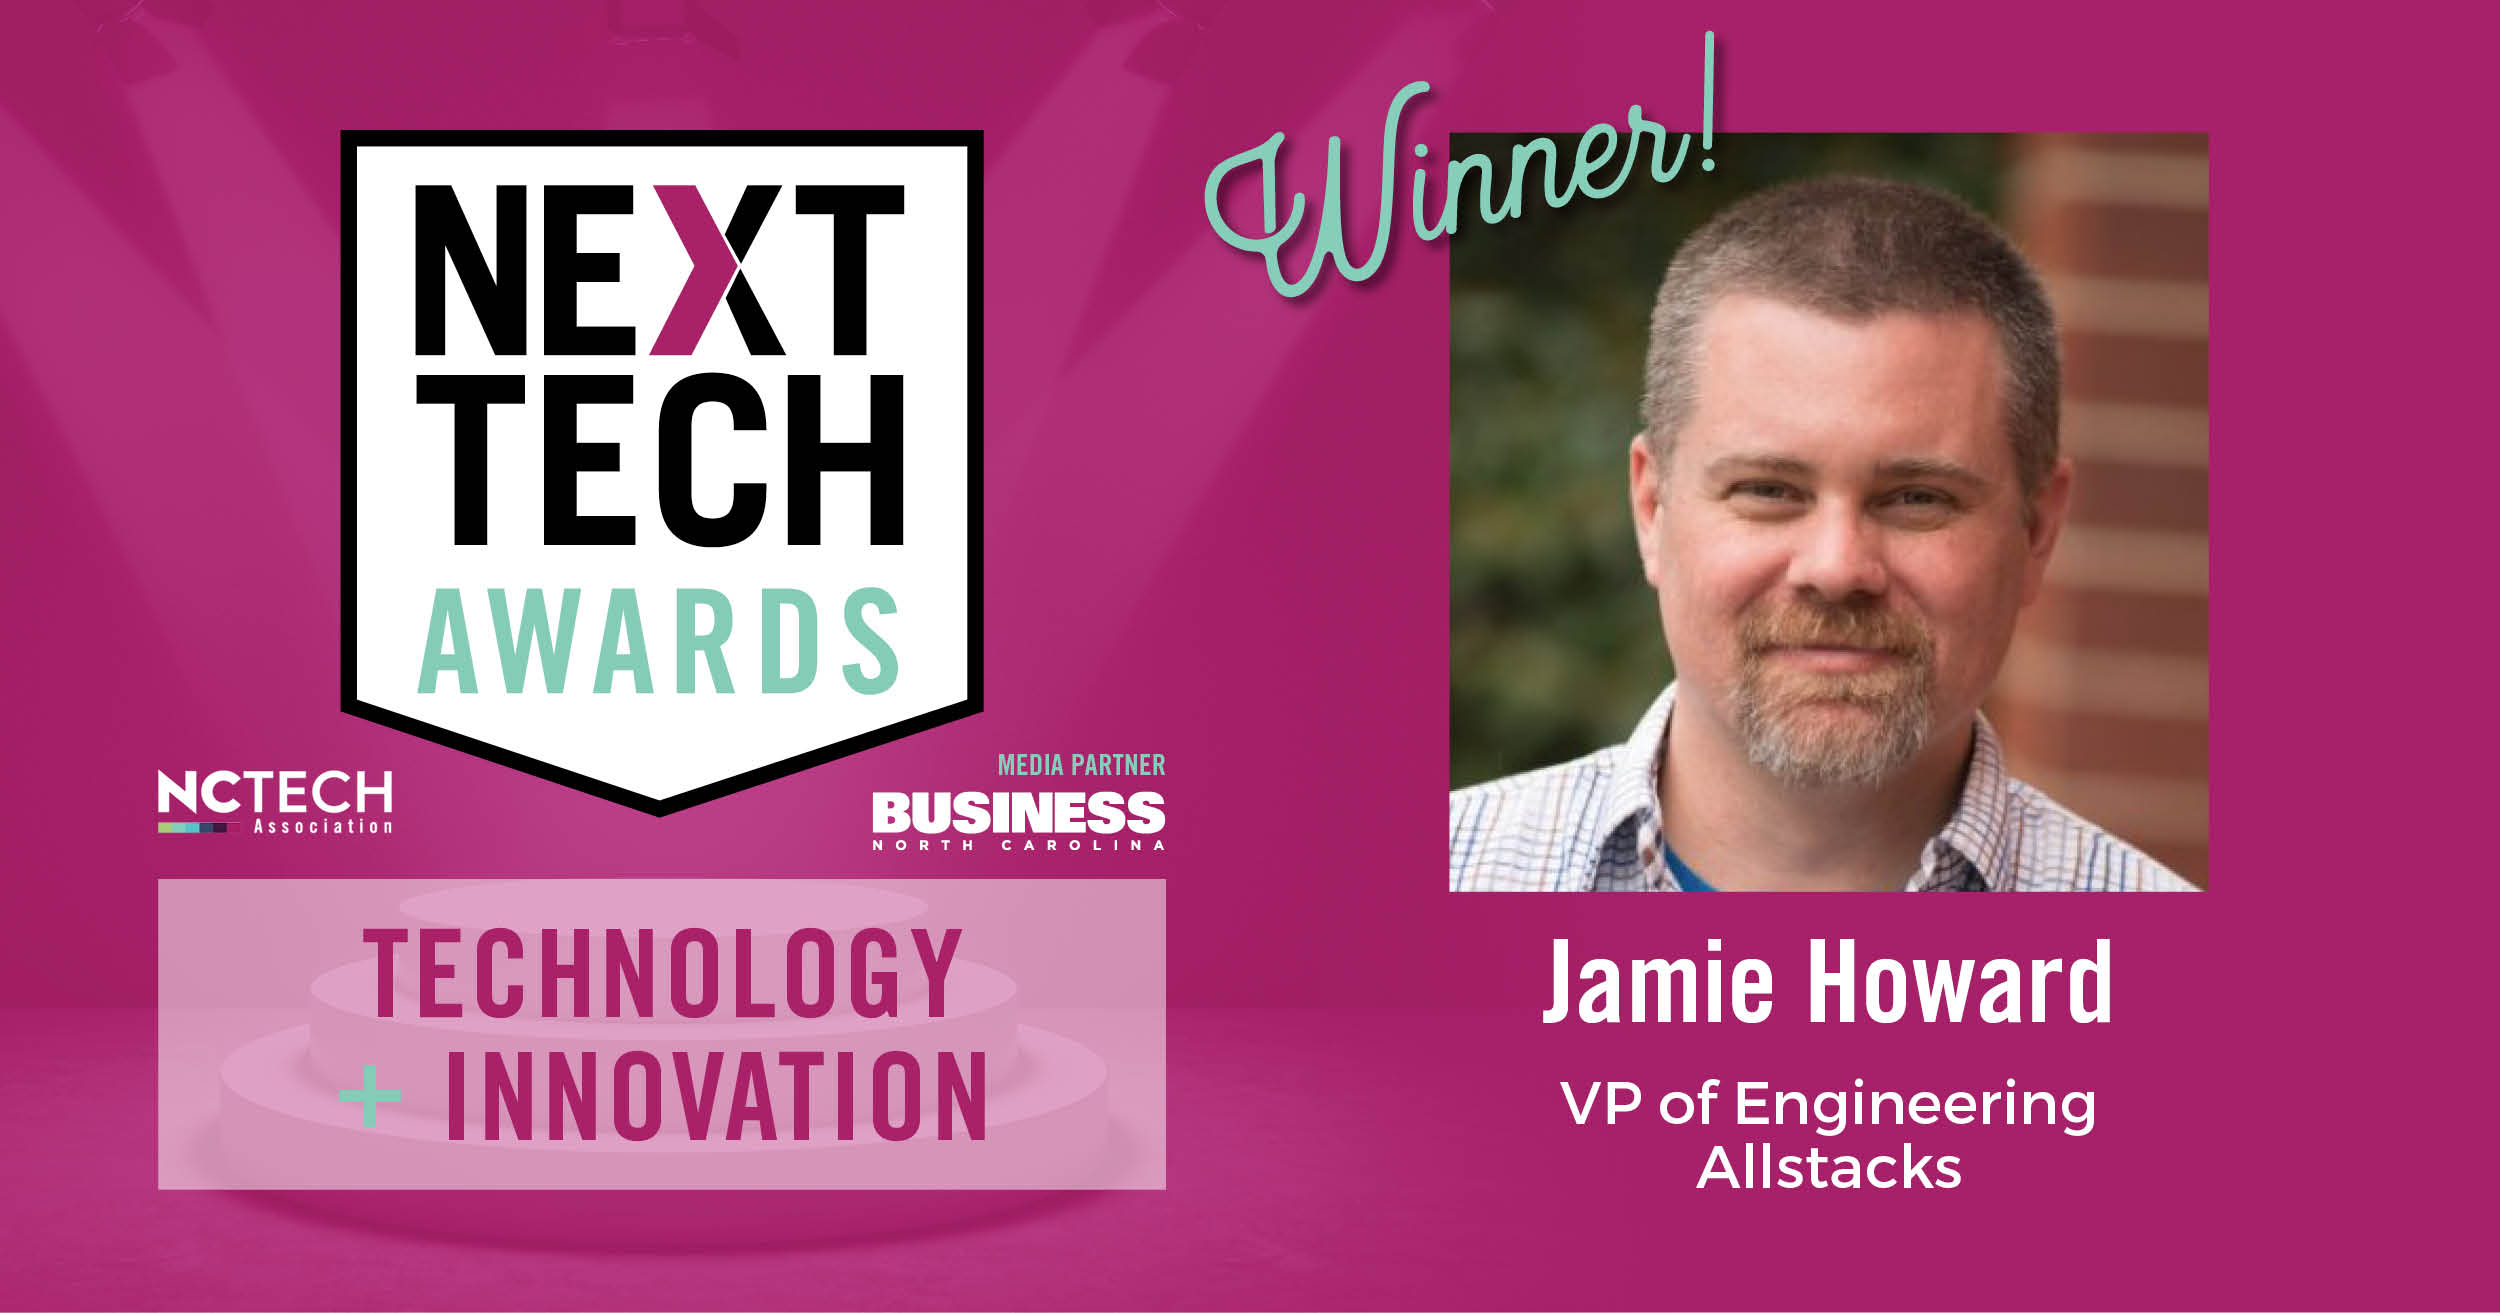 Allstacks’ Jamie Howard Selected as NEXT TECH Award Winner